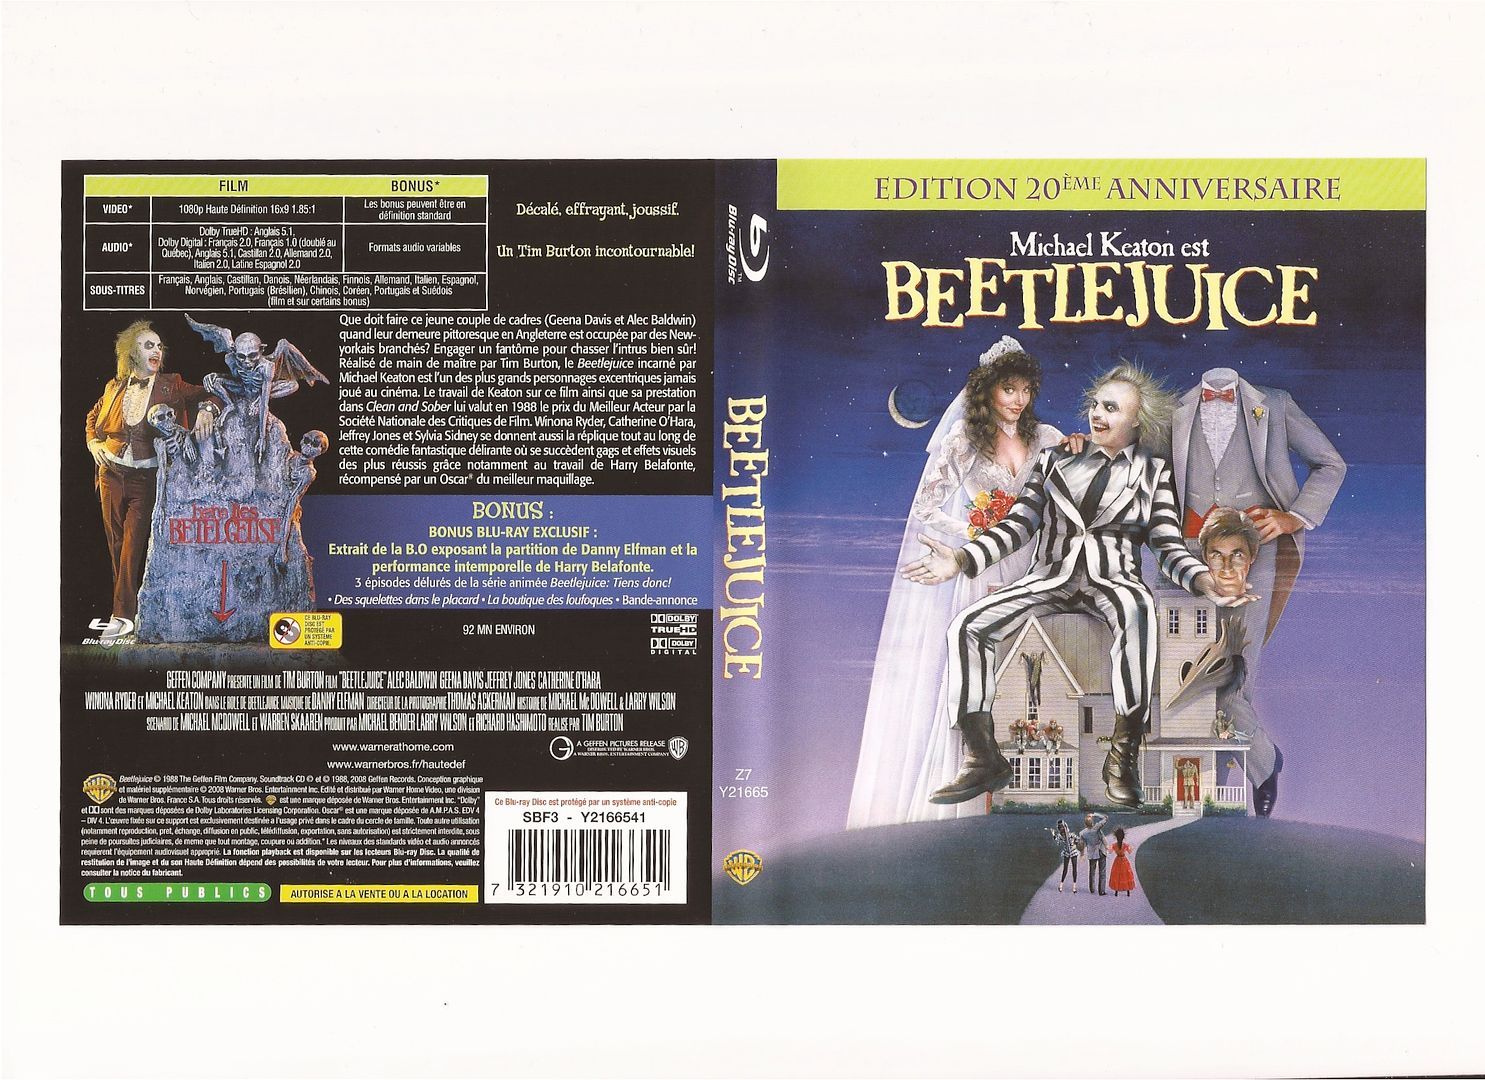 Beetlejuice - DVD/Bluray Beete